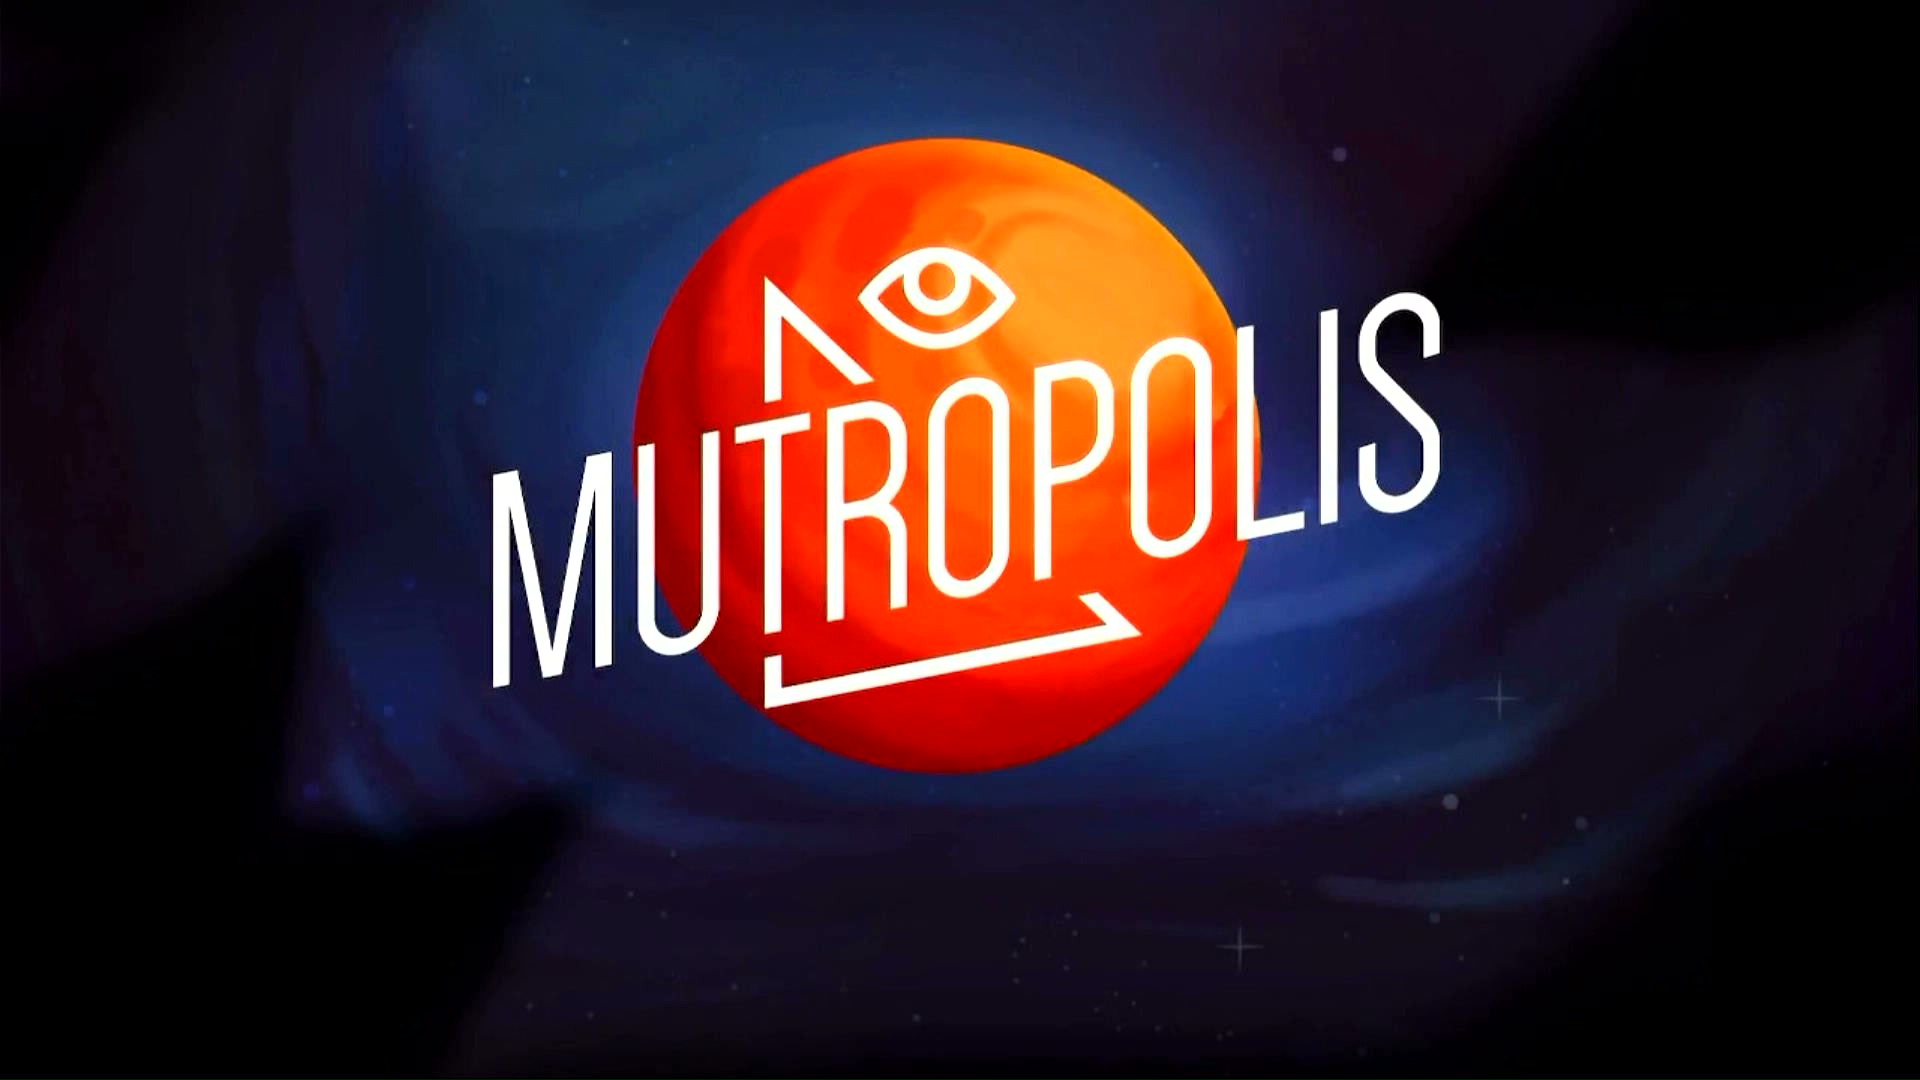 Mutropolis